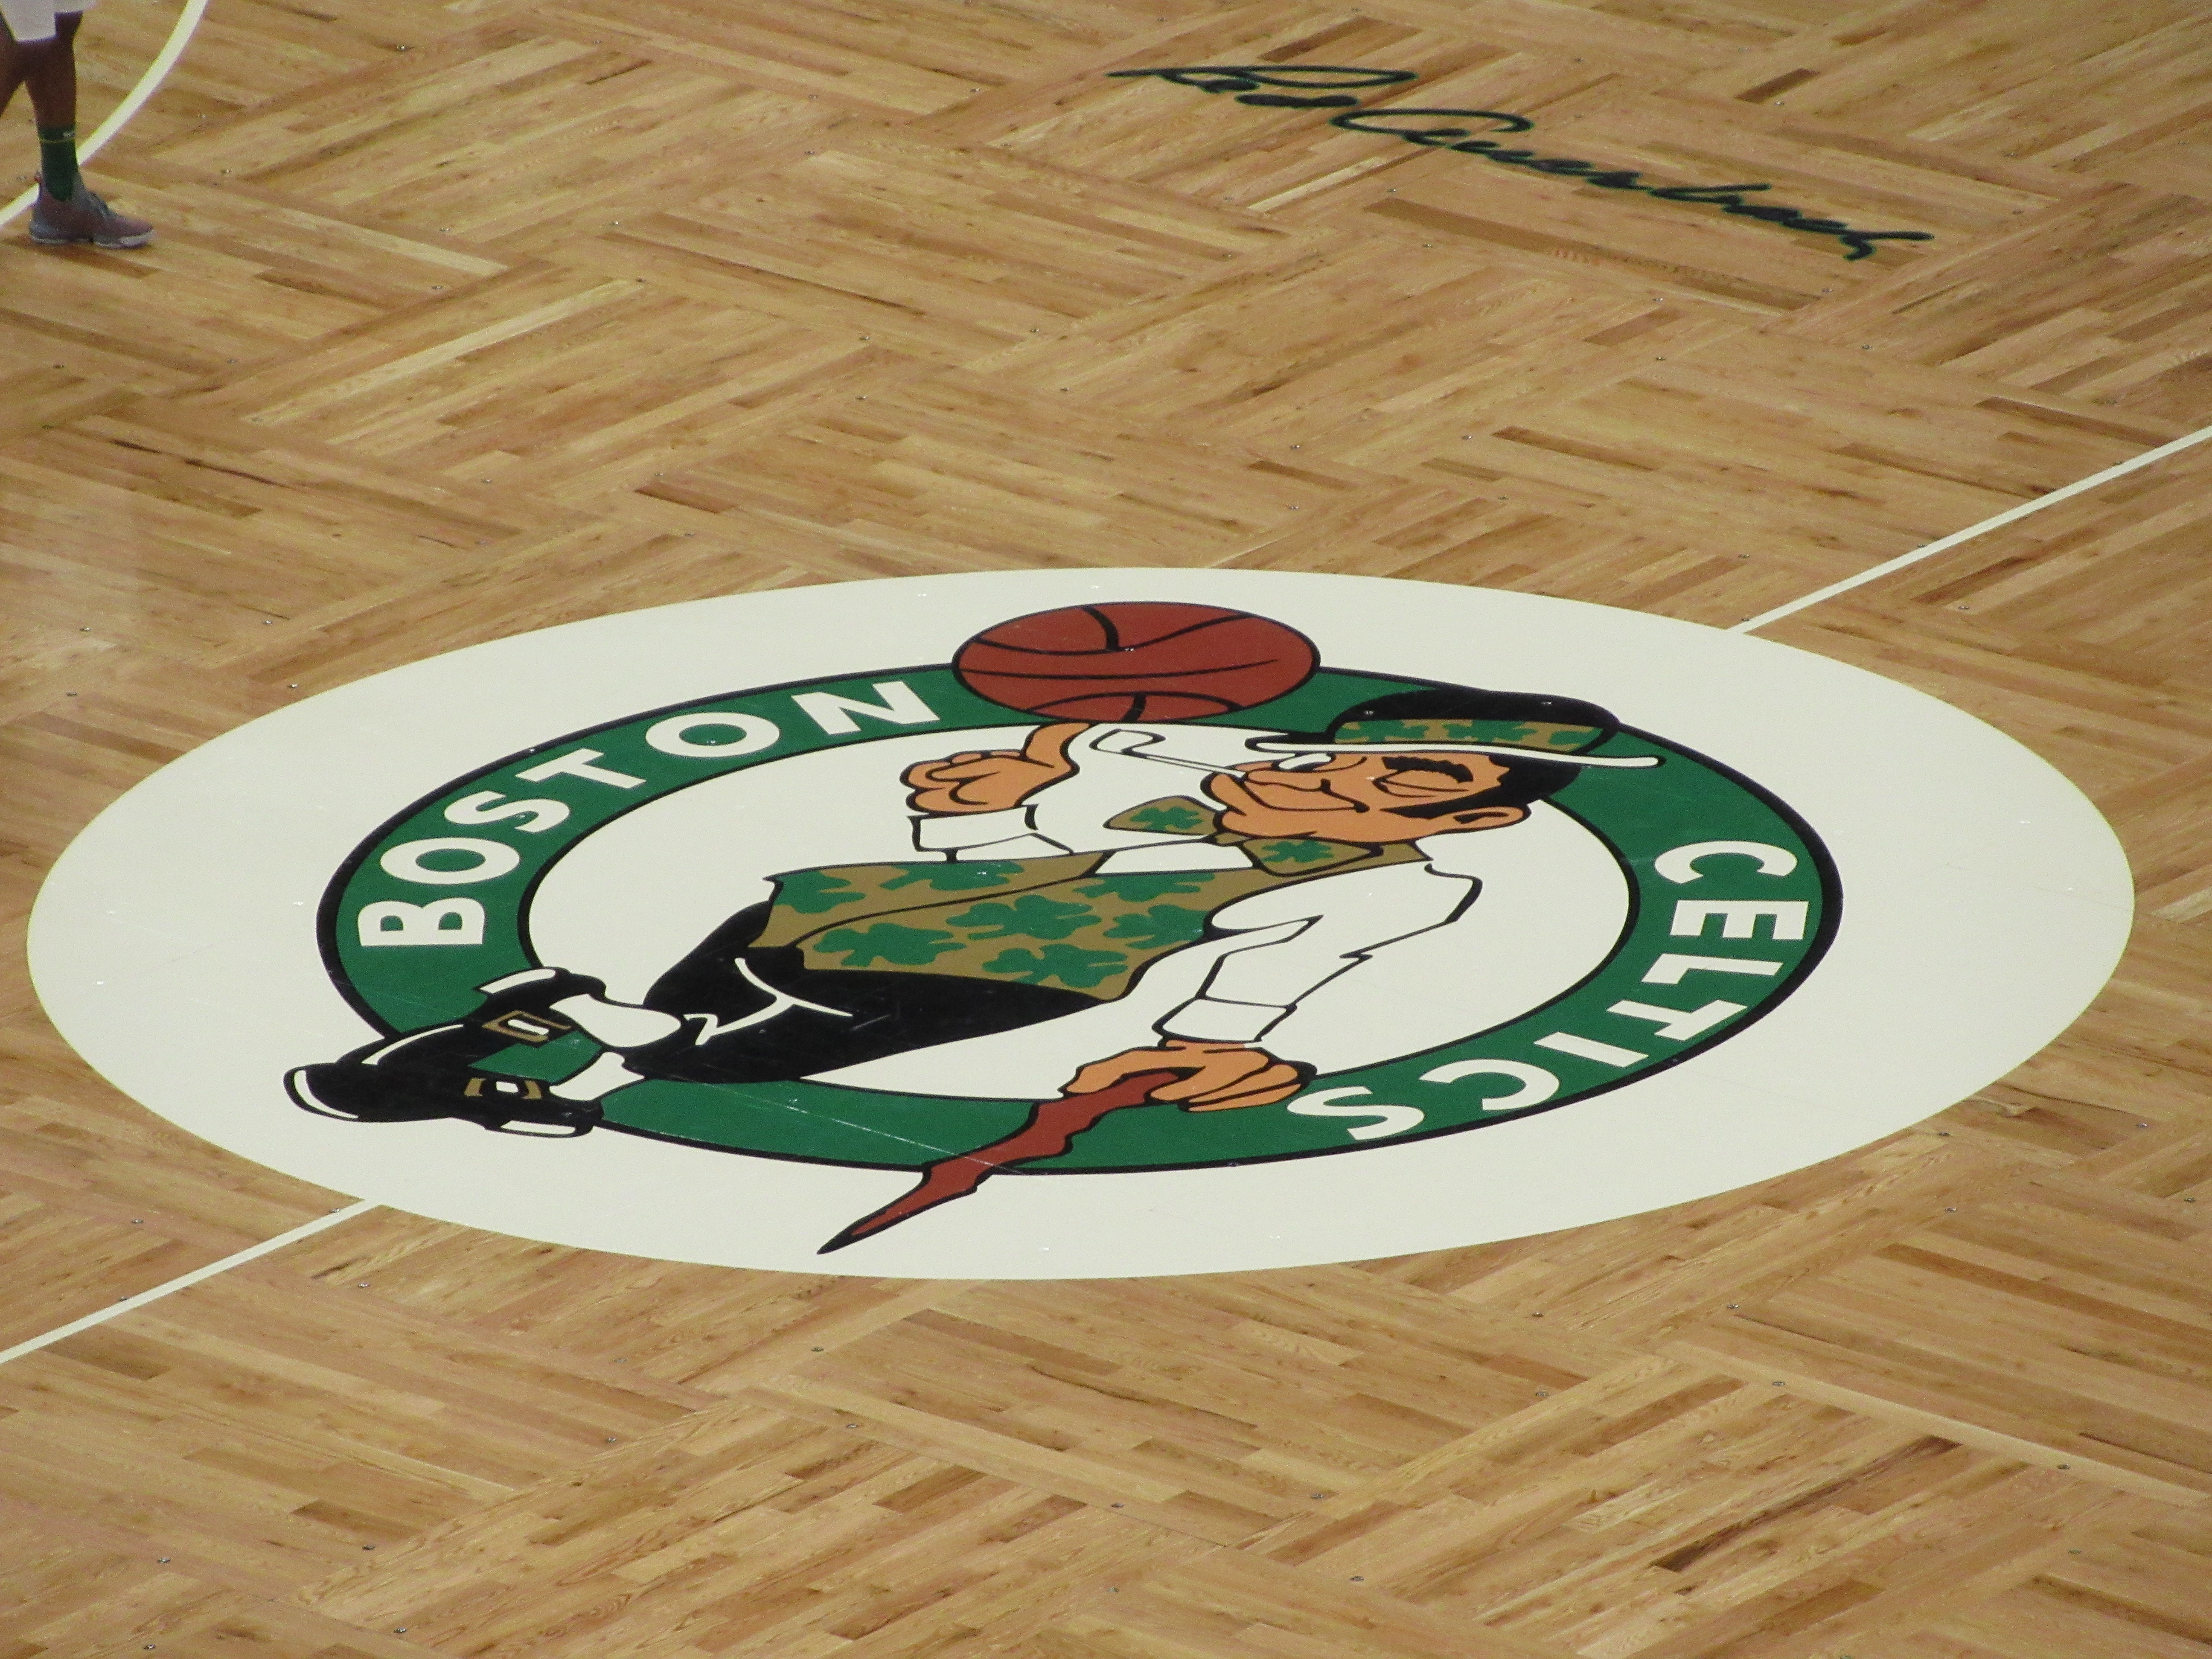 La franchise des Boston Celtics